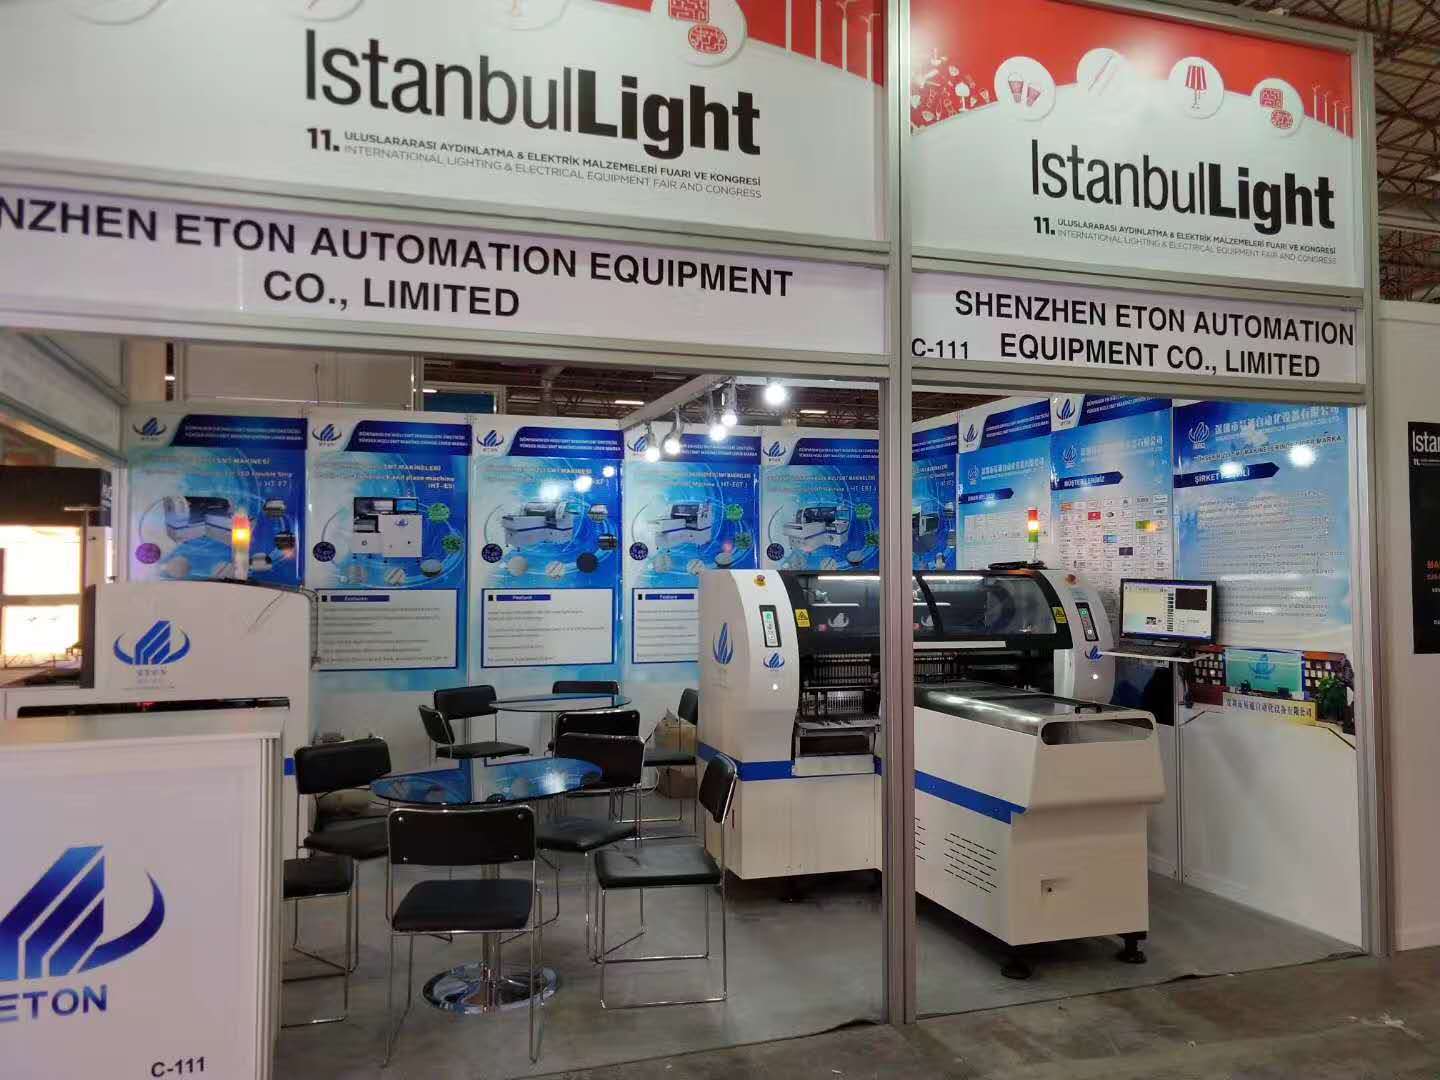 The 2018 Turkish International Brand Lighting Exhibition